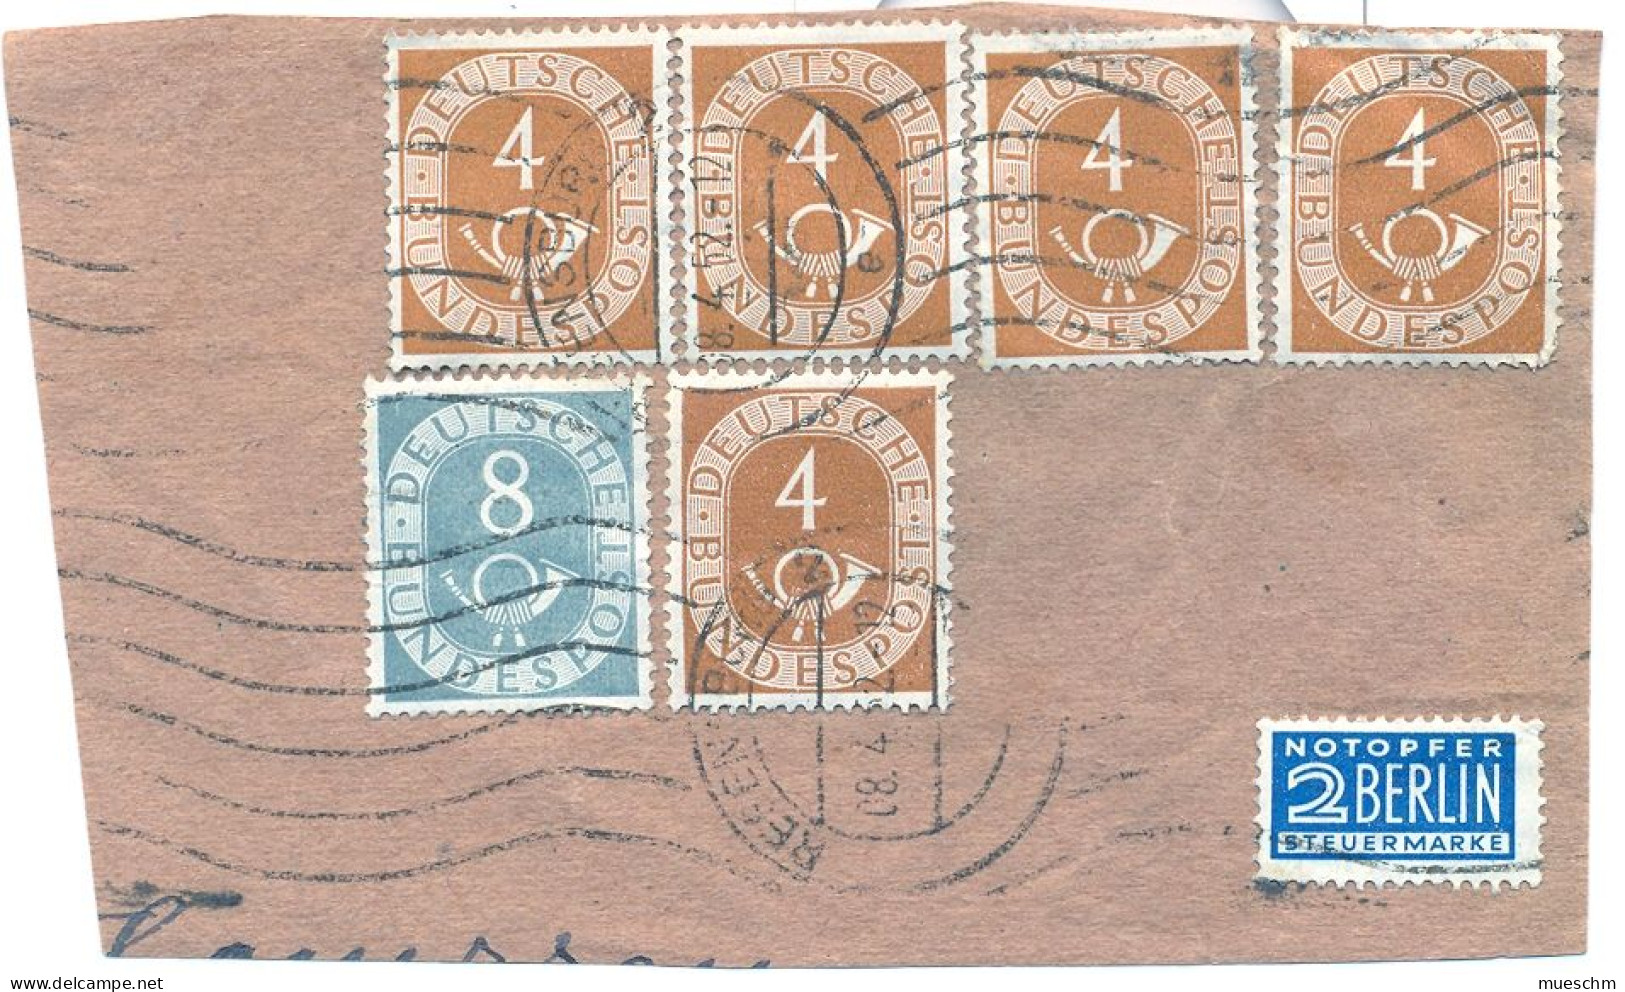 Bundesrepublik, 1952, Briefstück Mit 5xMi.124 (Posthorn 4Pfg.)+1xMi.Nr.127 (8Pfg.)+Notopfer Berlin (8473E) - Used Stamps